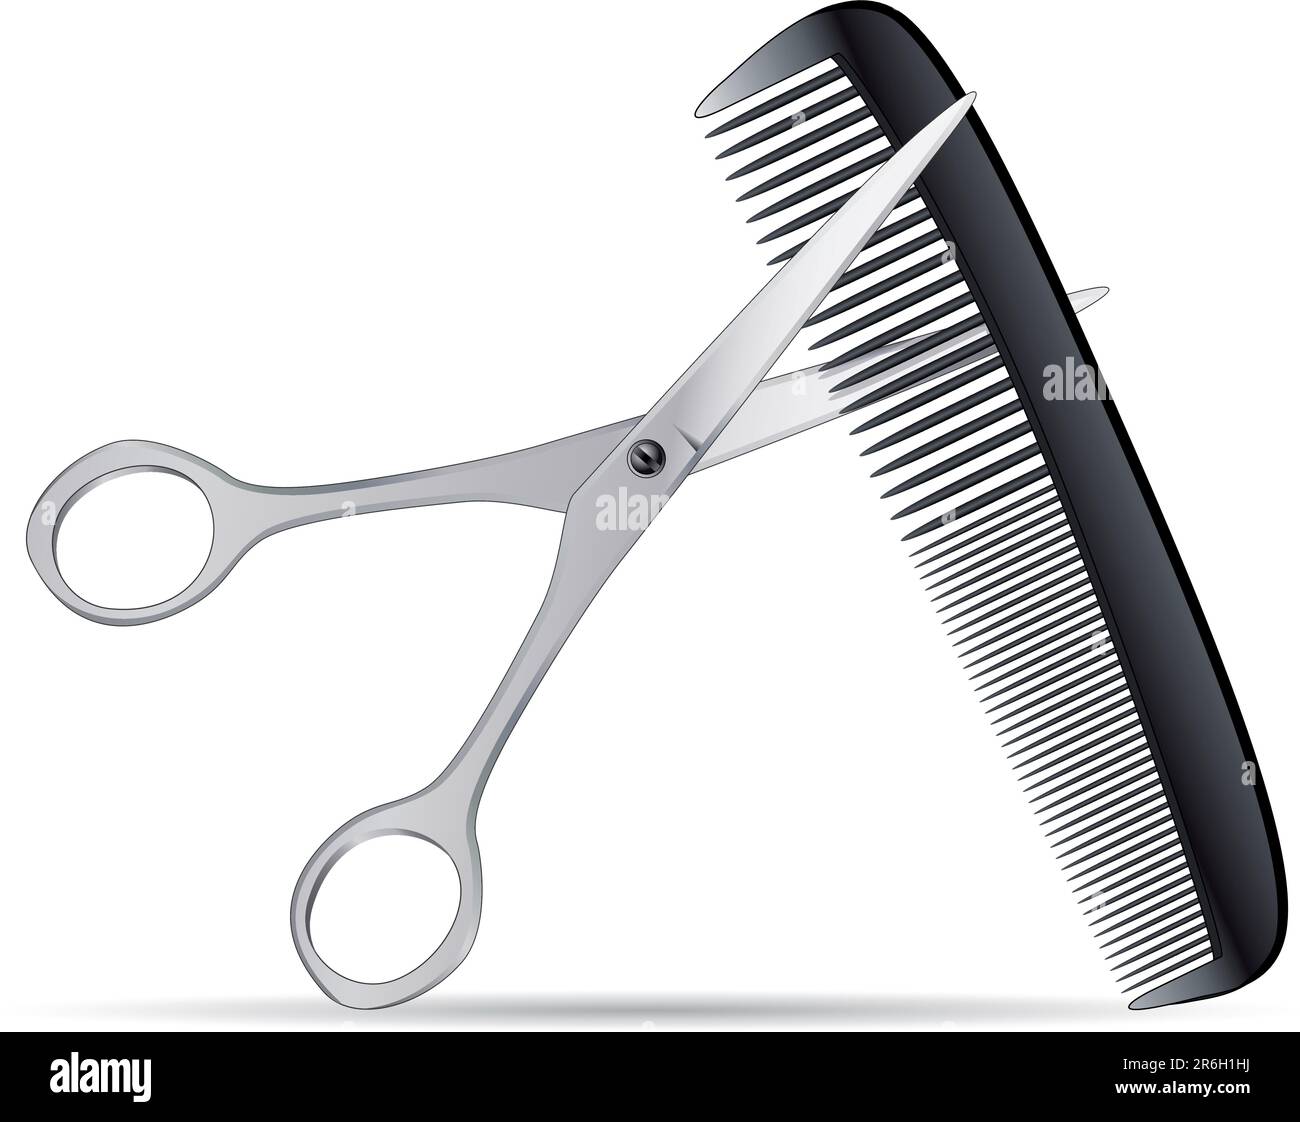 Barber tools - vector illustration Stock Vector